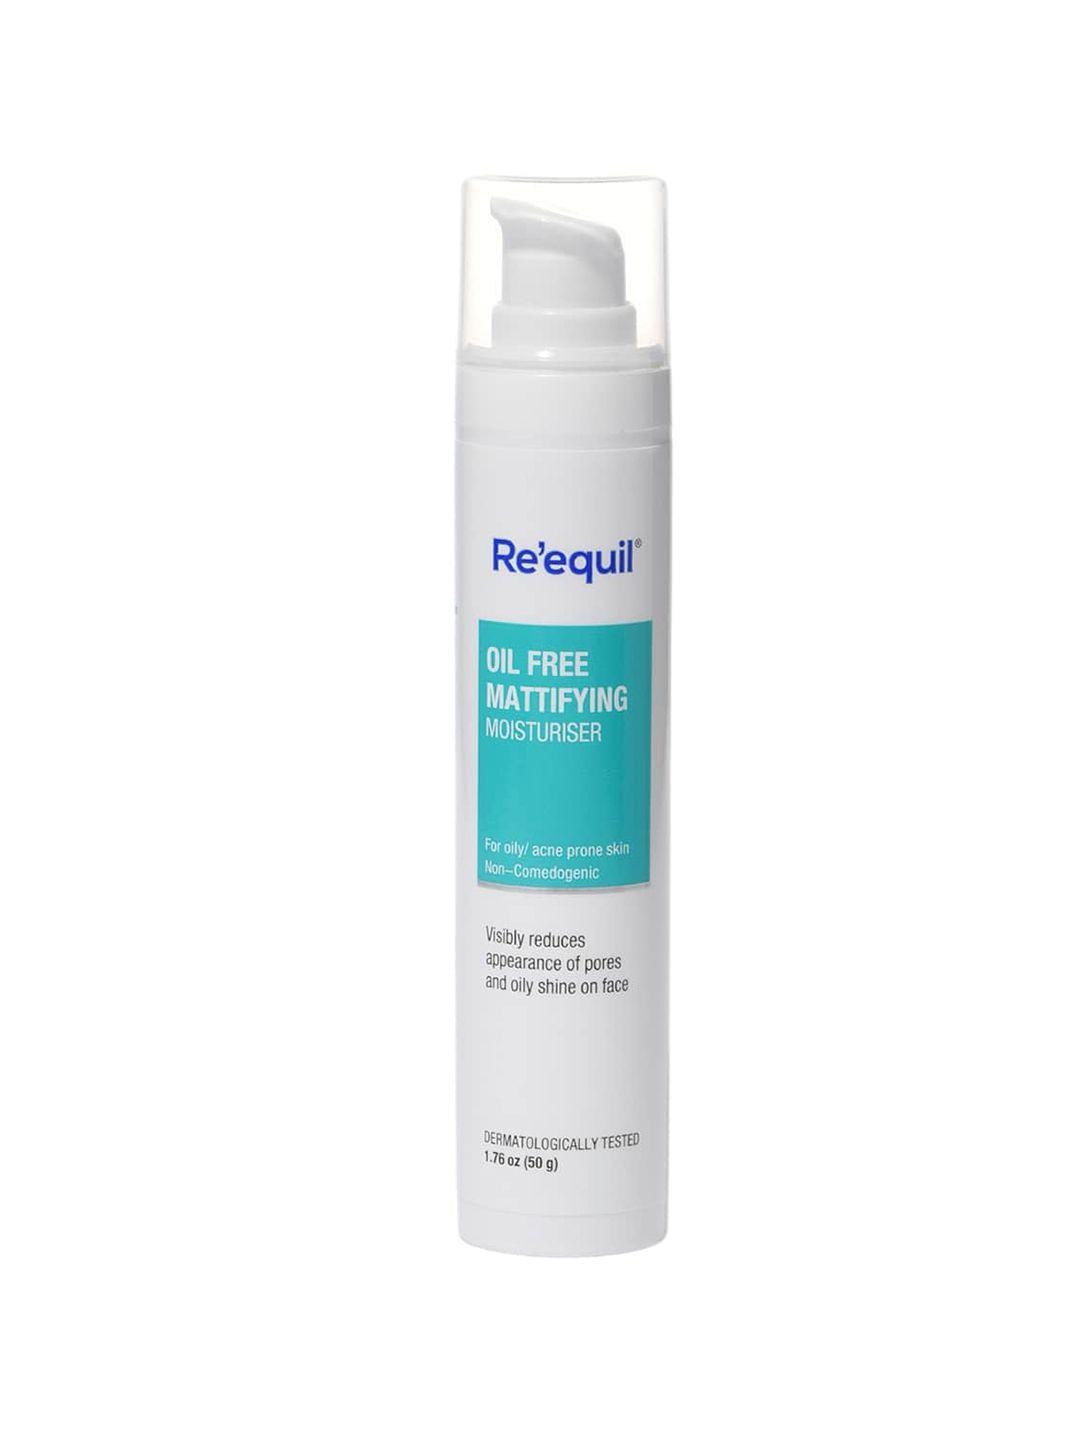 reequil oil free mattifying moisturiser 50g